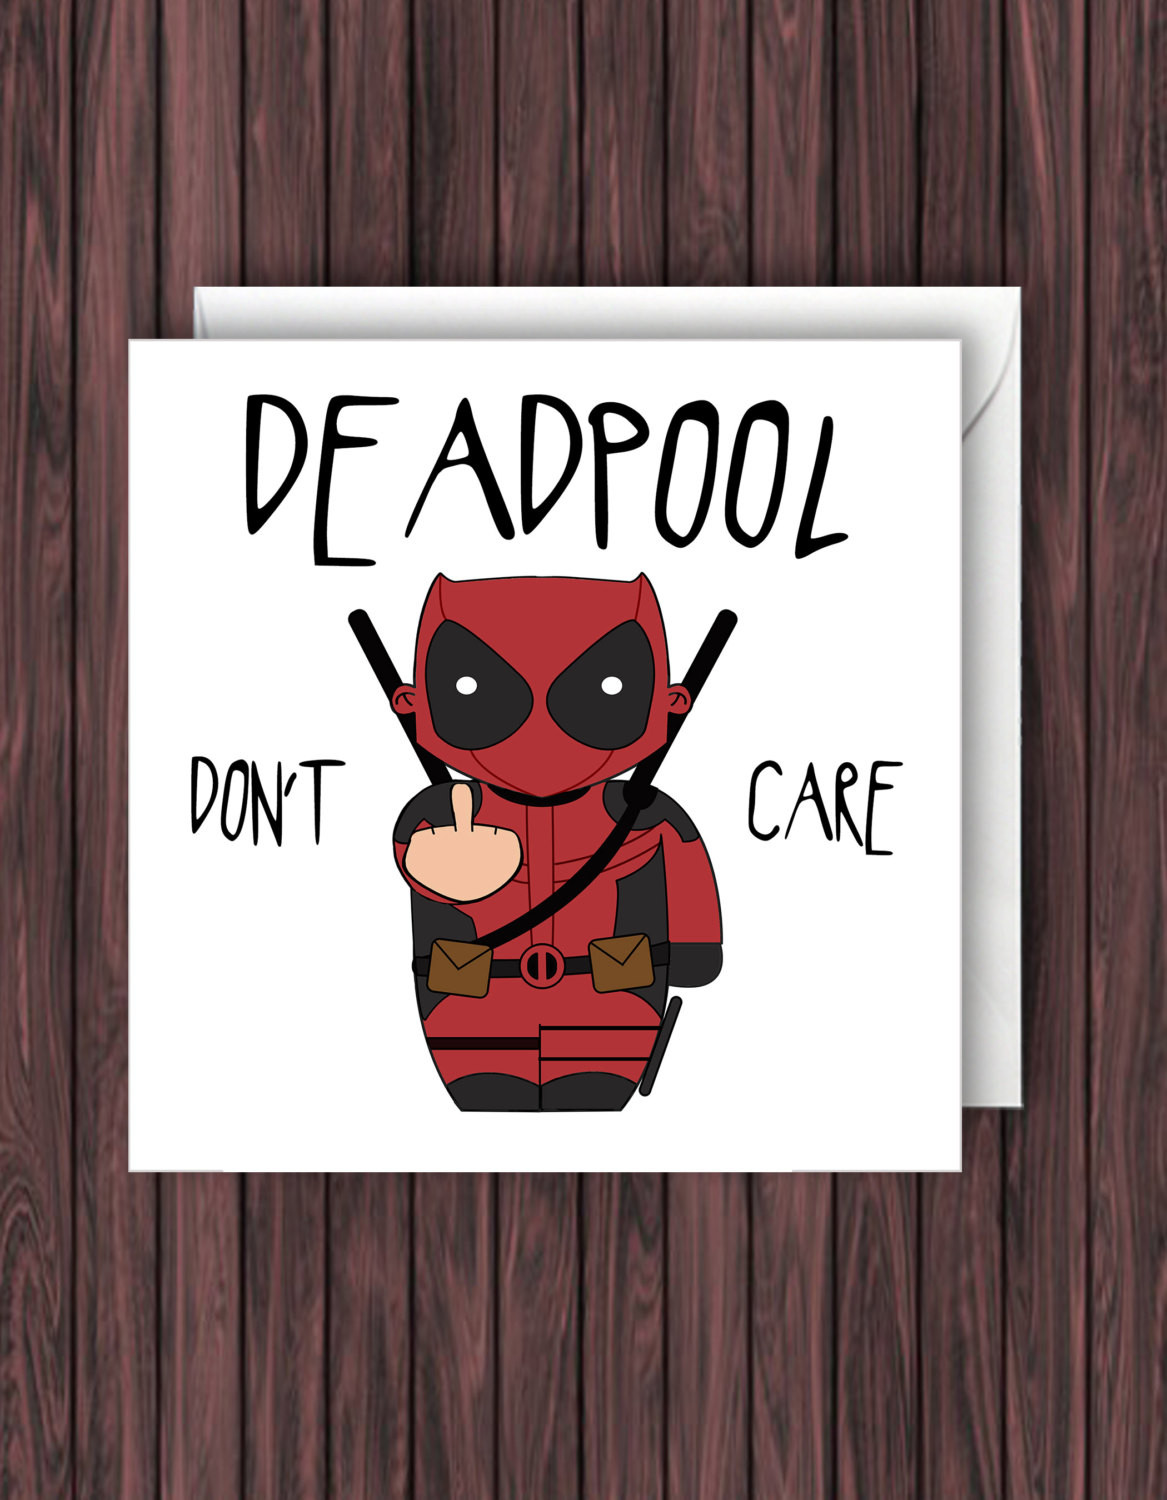 Best ideas about Deadpool Birthday Card
. Save or Pin Deadpool Funny Birthday Card Greetings Card Geek Blank Now.